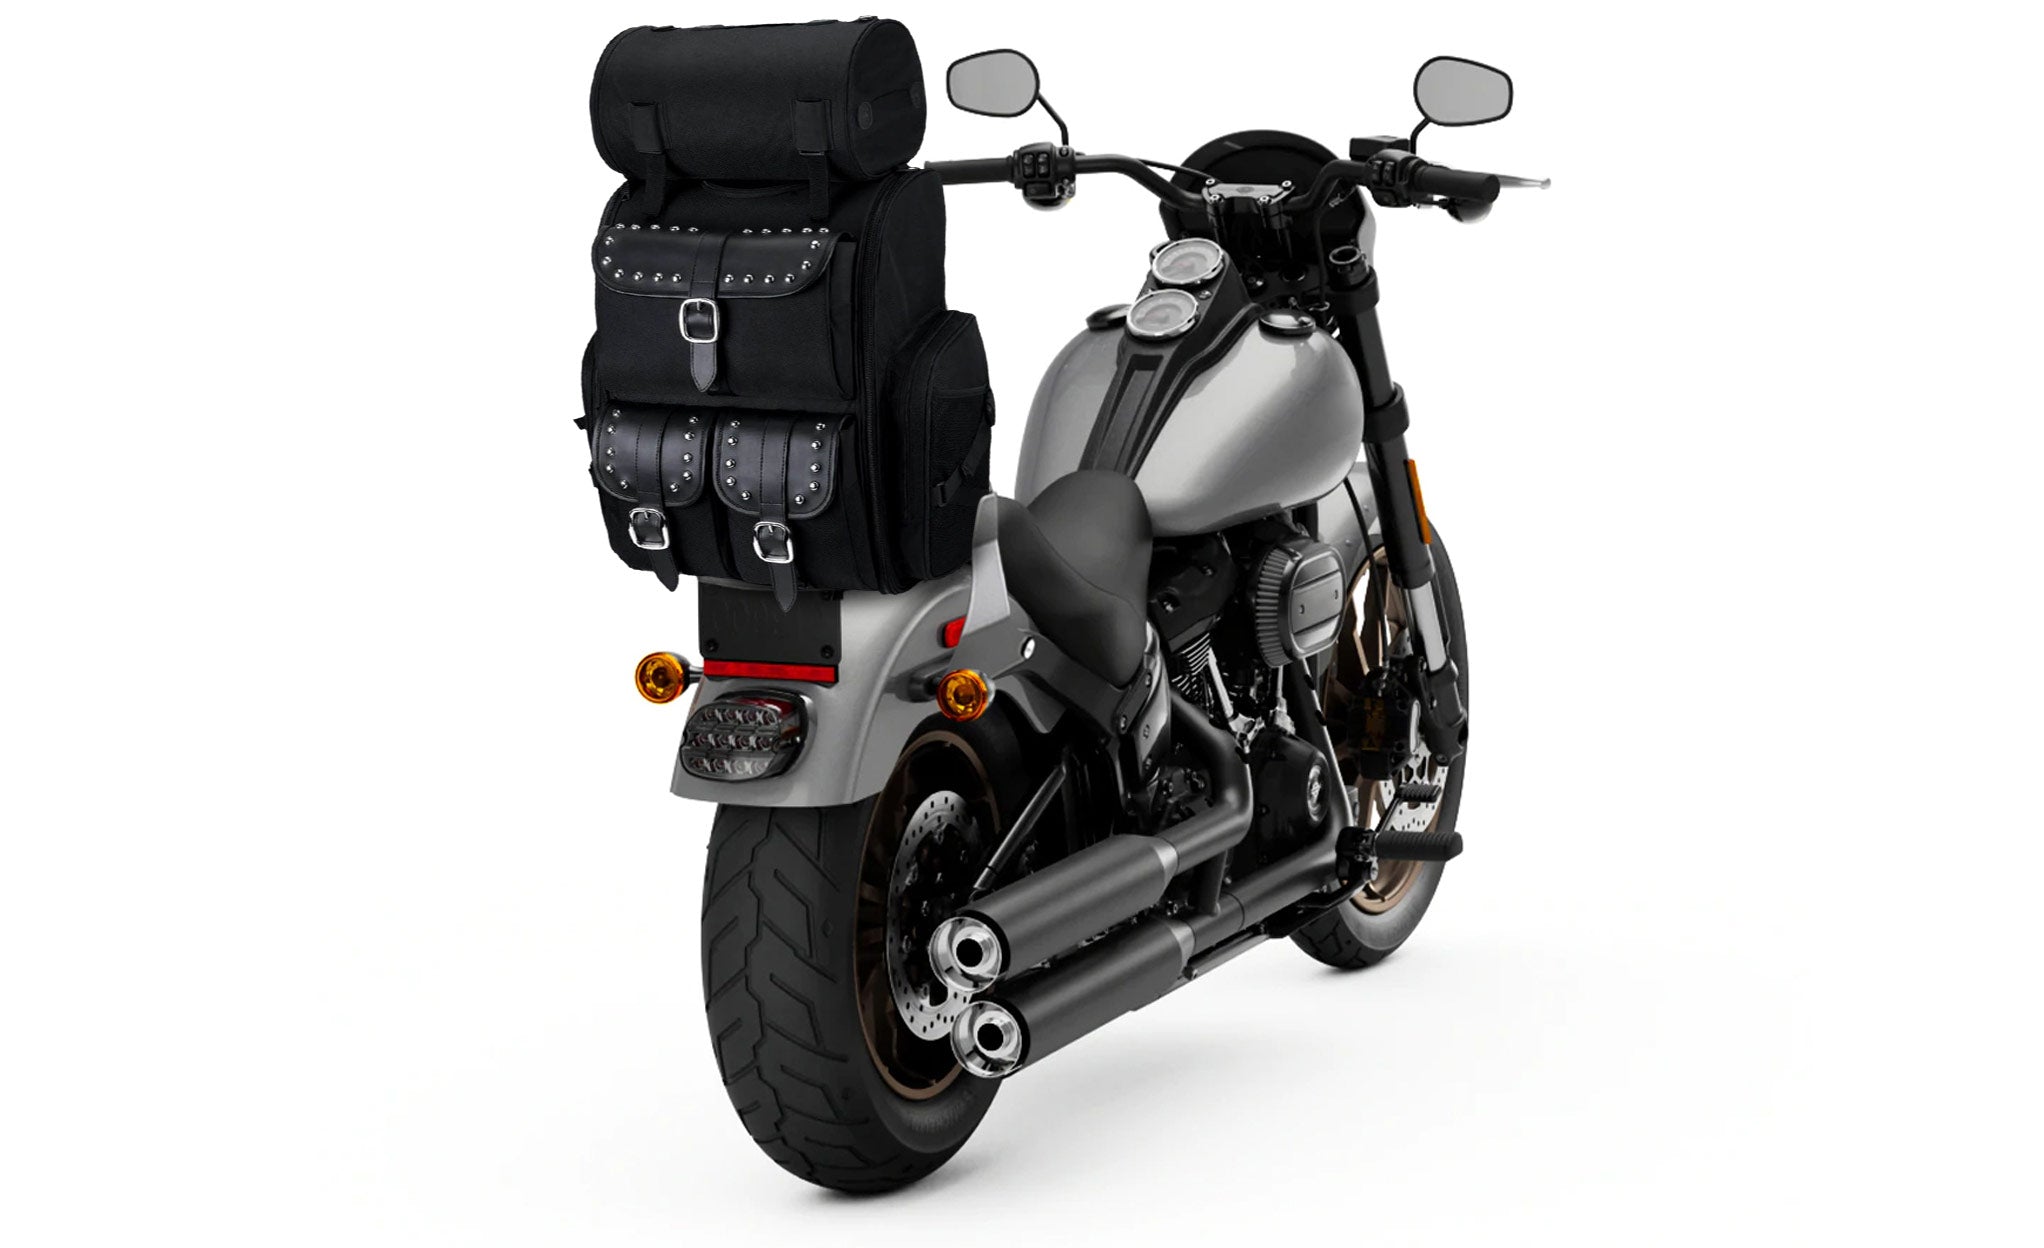 Viking Highway Extra Large Studded Kawasaki Motorcycle Tail Bag Bag on Bike View @expand